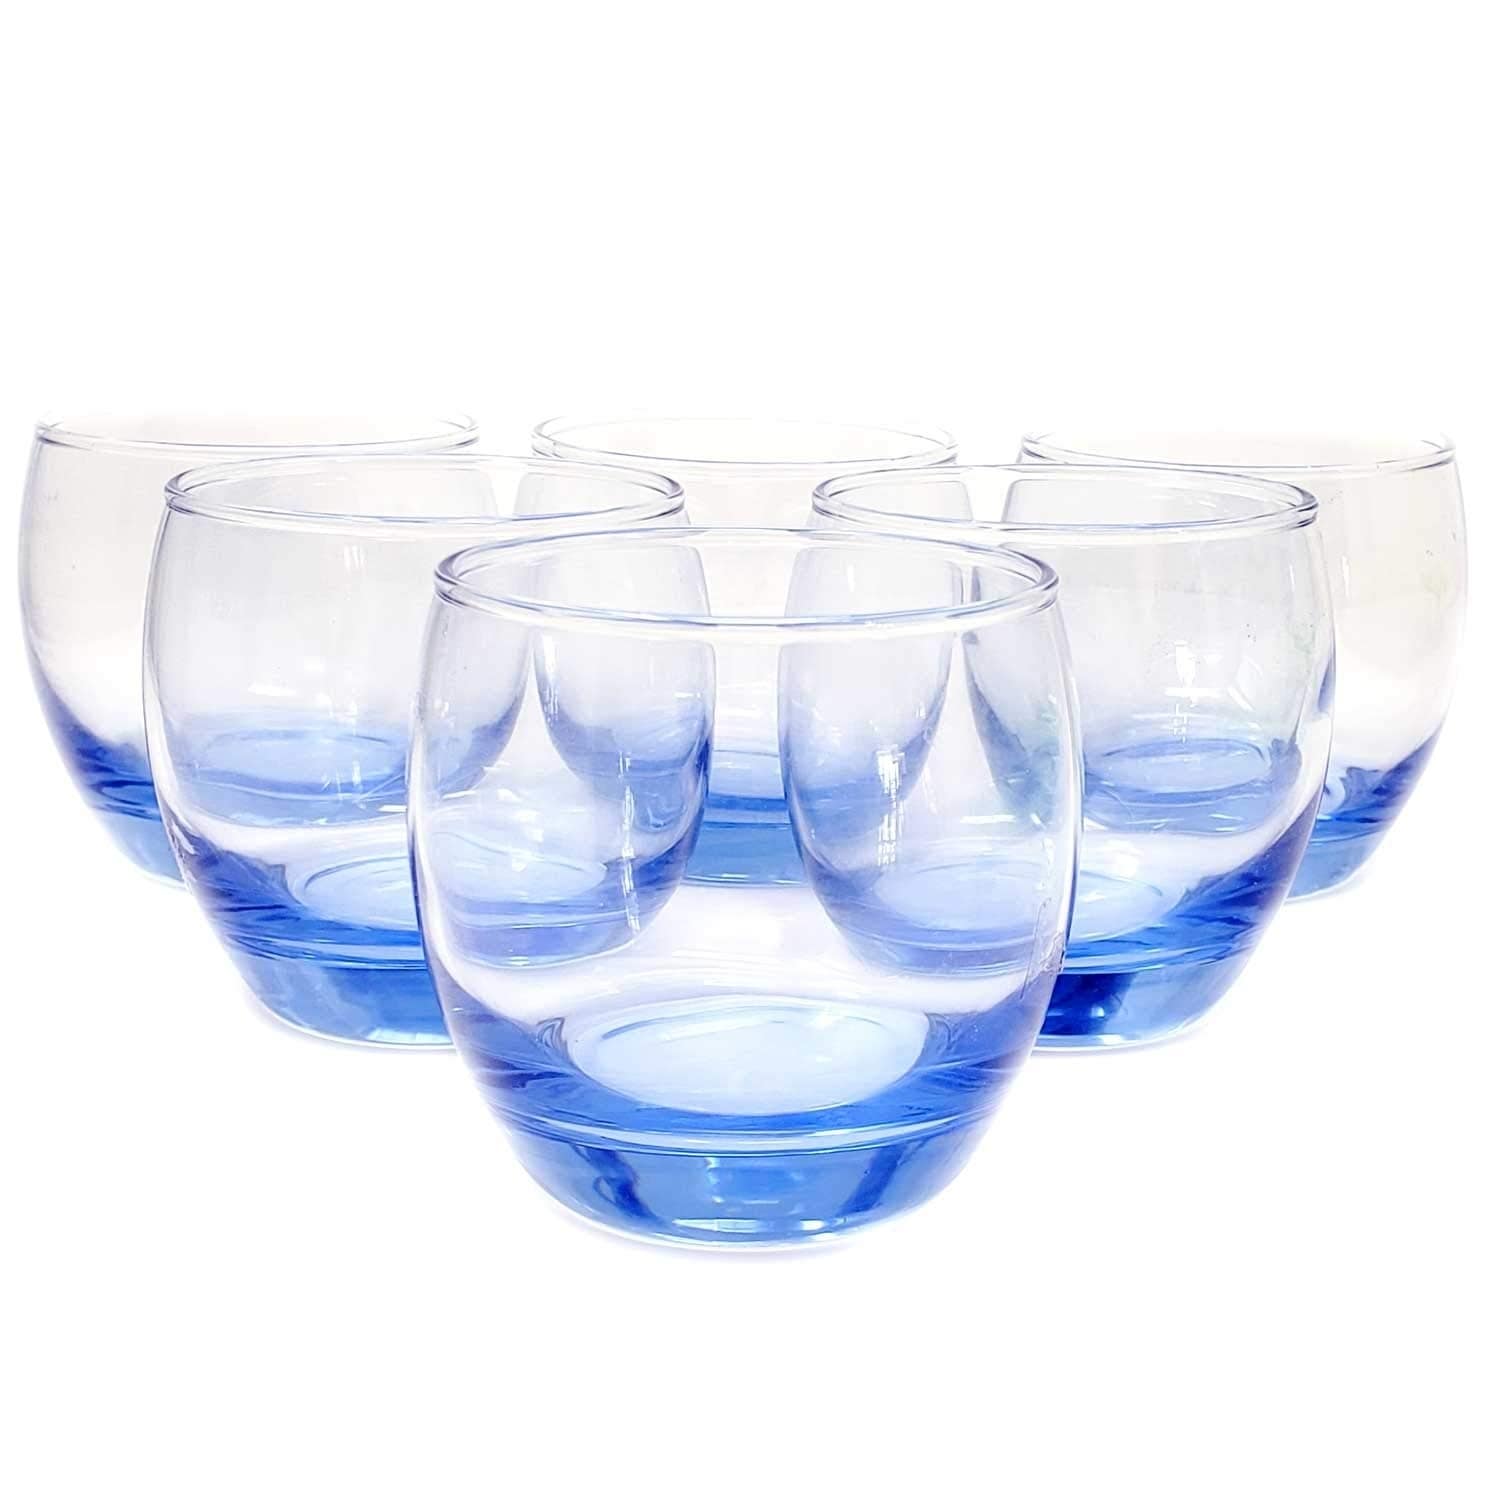 glass tumbler cups